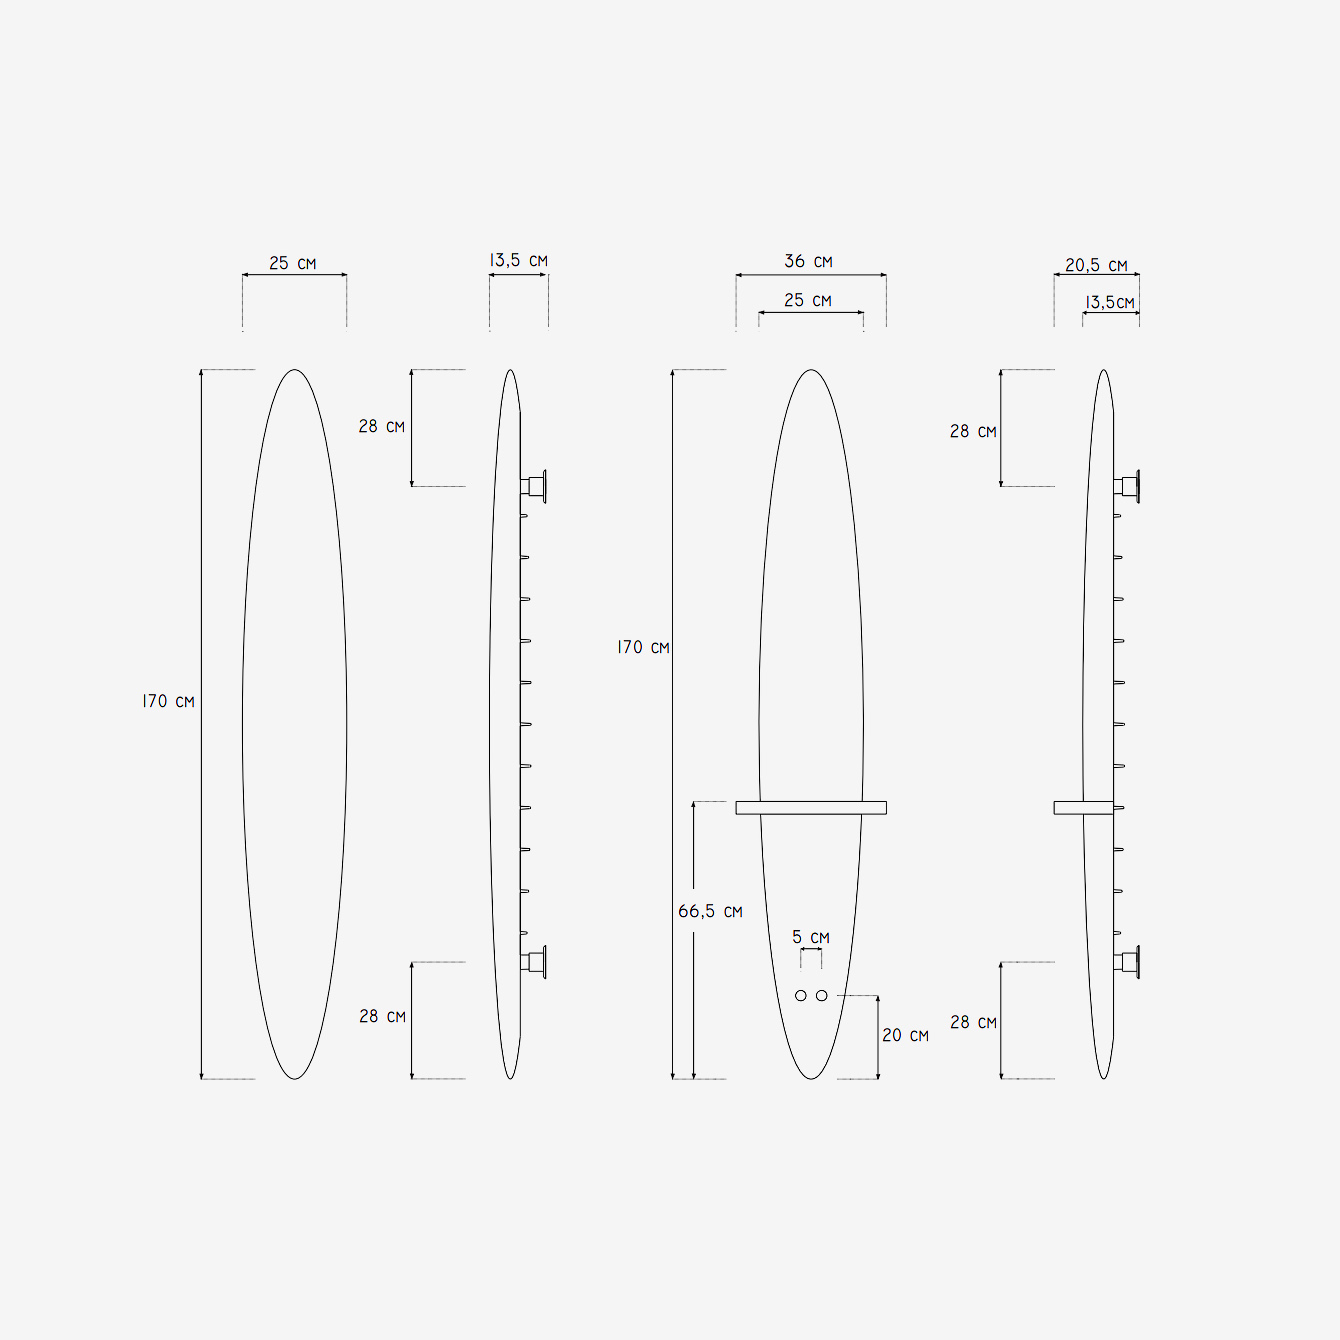 Blade Bath - Moderner ANTRAX IT Designer-Handtuchwärmer aus Aluminium | Radiamo